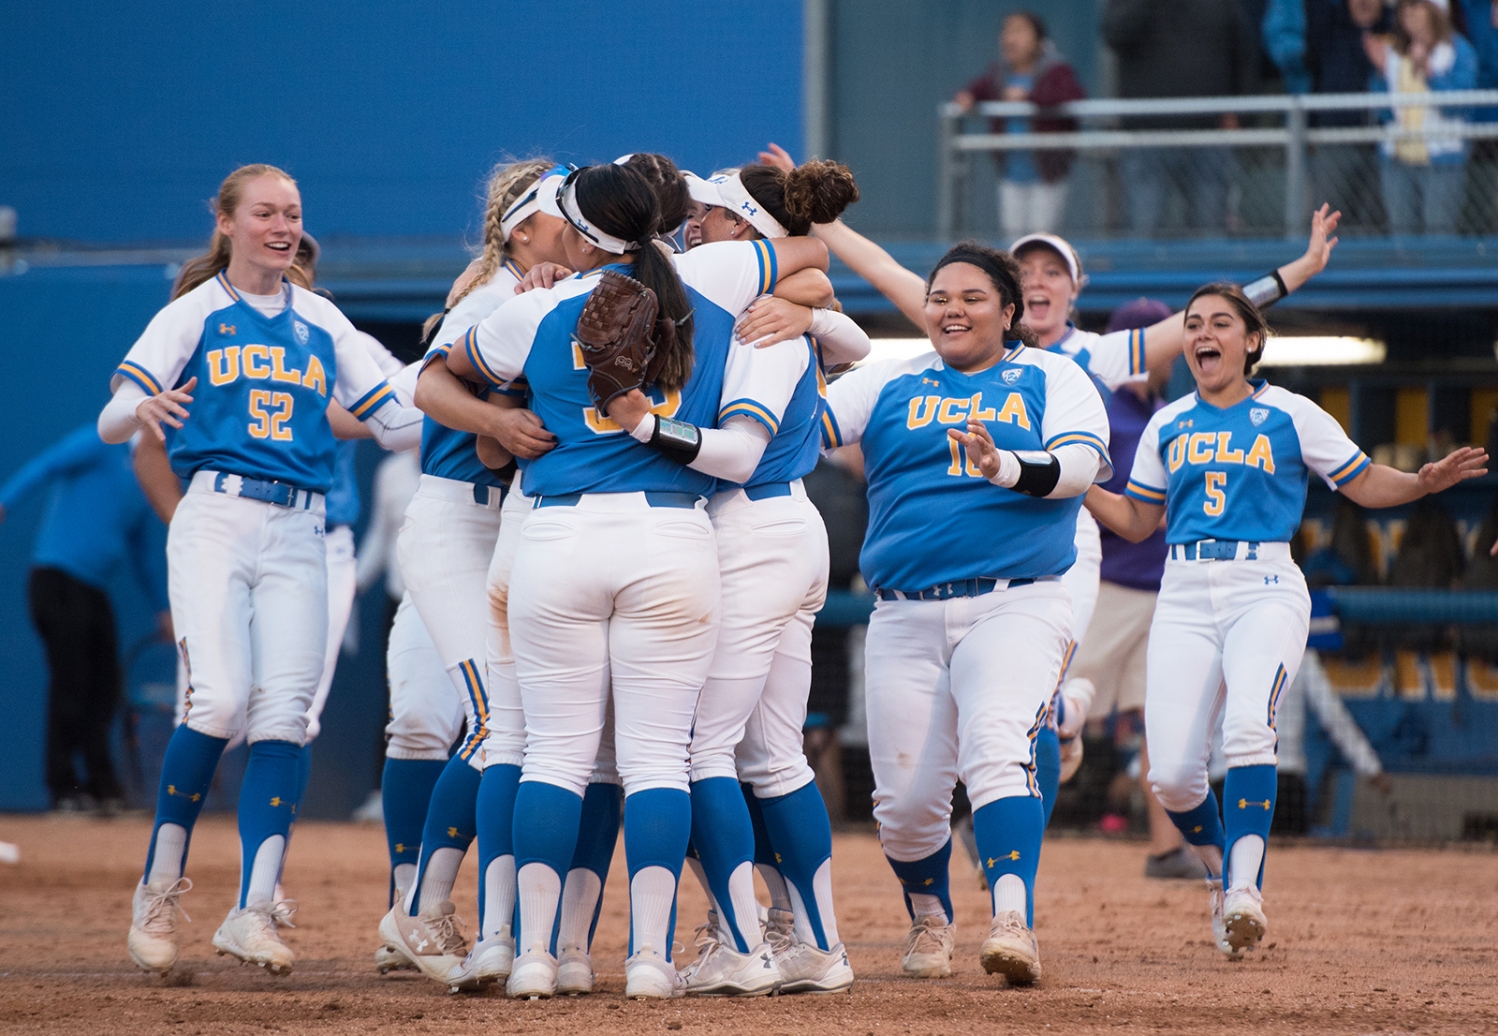 Gallery UCLA softball advances to the Women’s College World Series